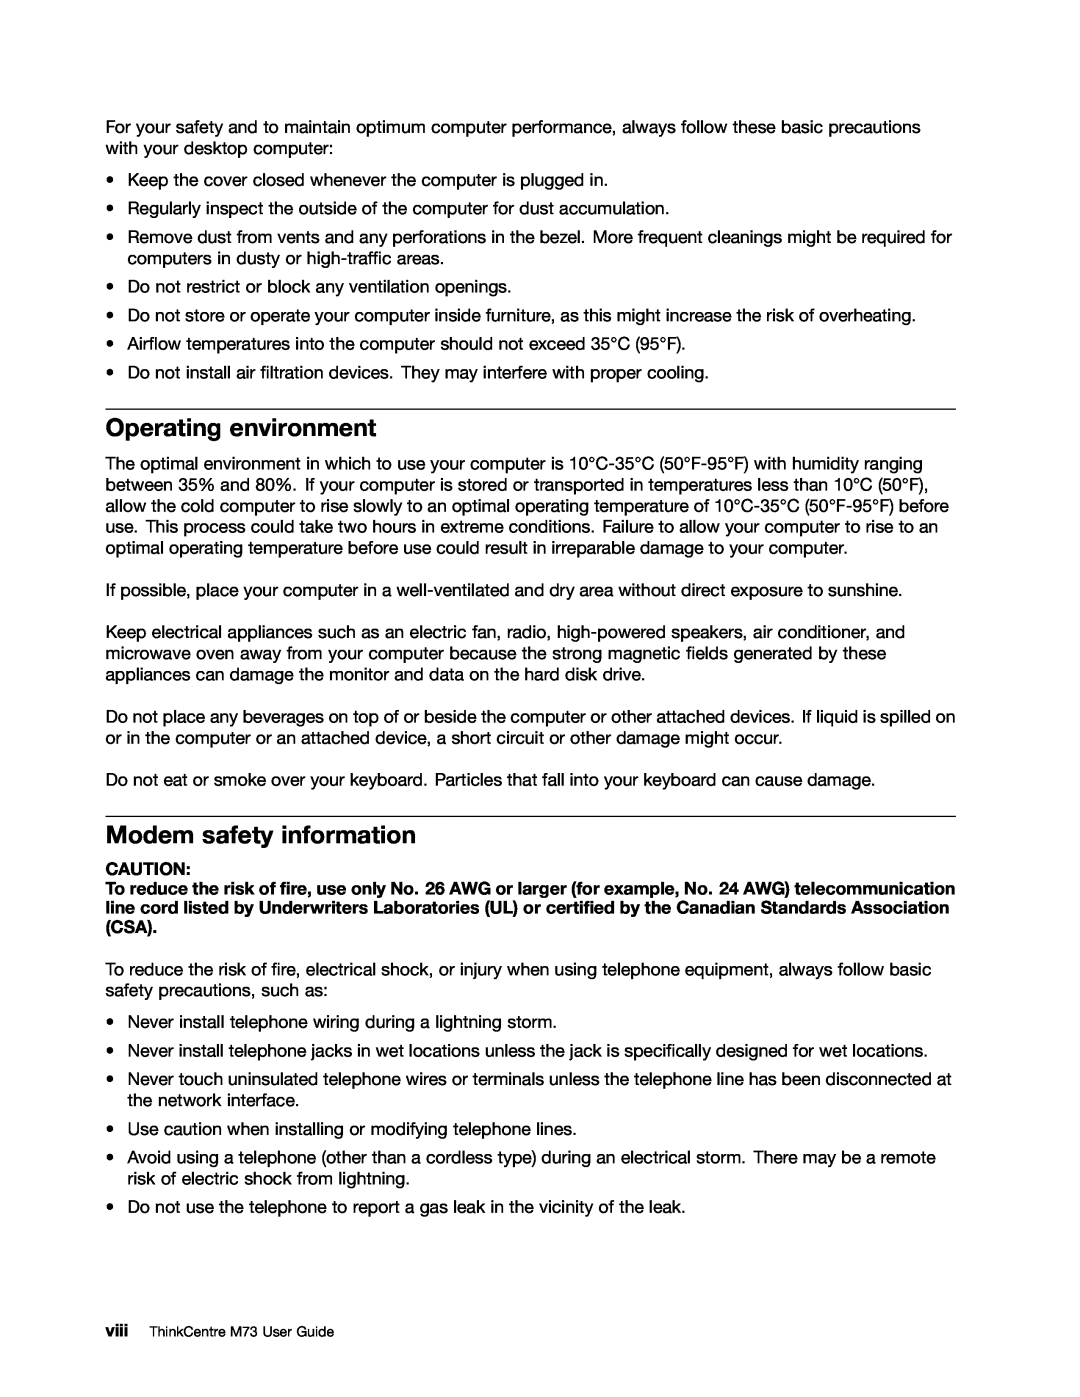 Lenovo M73 manual Operating environment, Modem safety information 